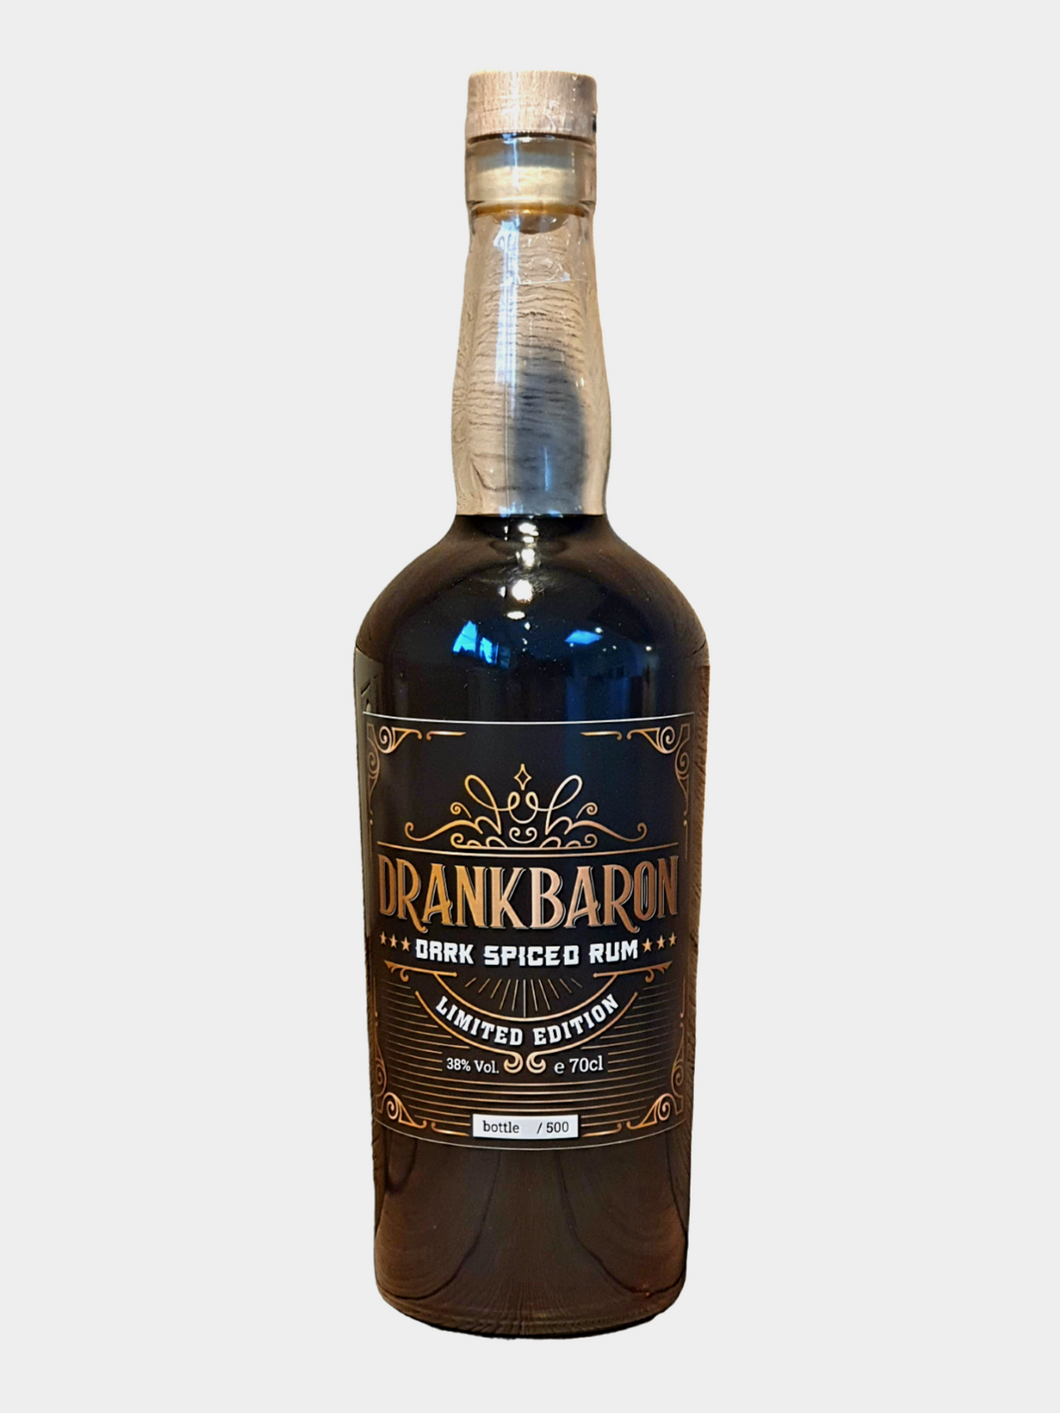 Drink Baron Dark Spiced Rum Limited Edition